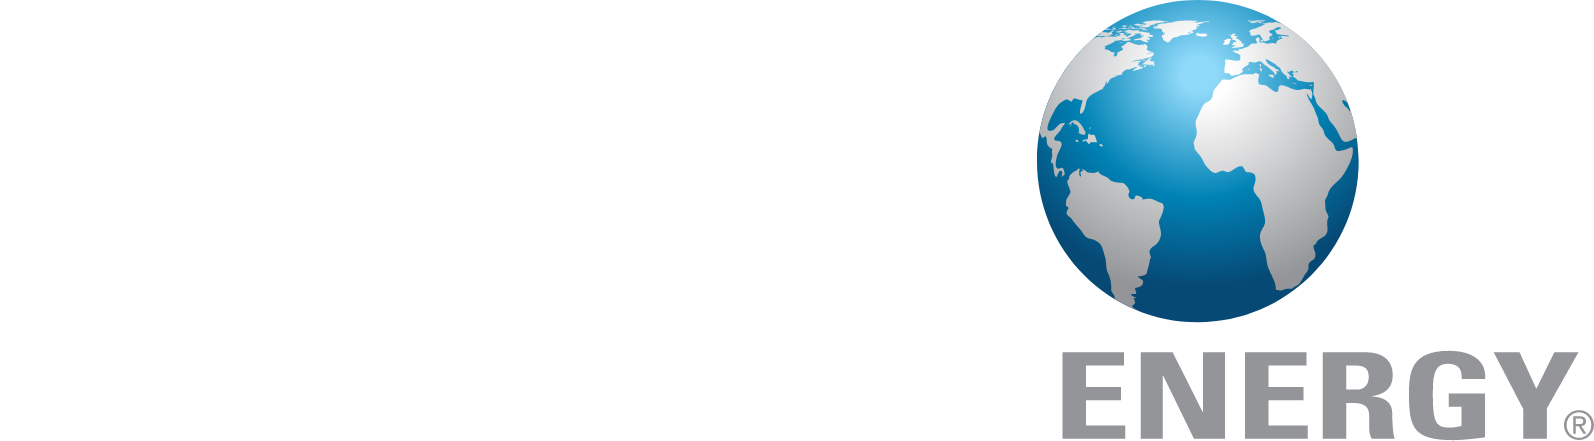 Kosmos Energy Logo groß für dunkle Hintergründe (transparentes PNG)